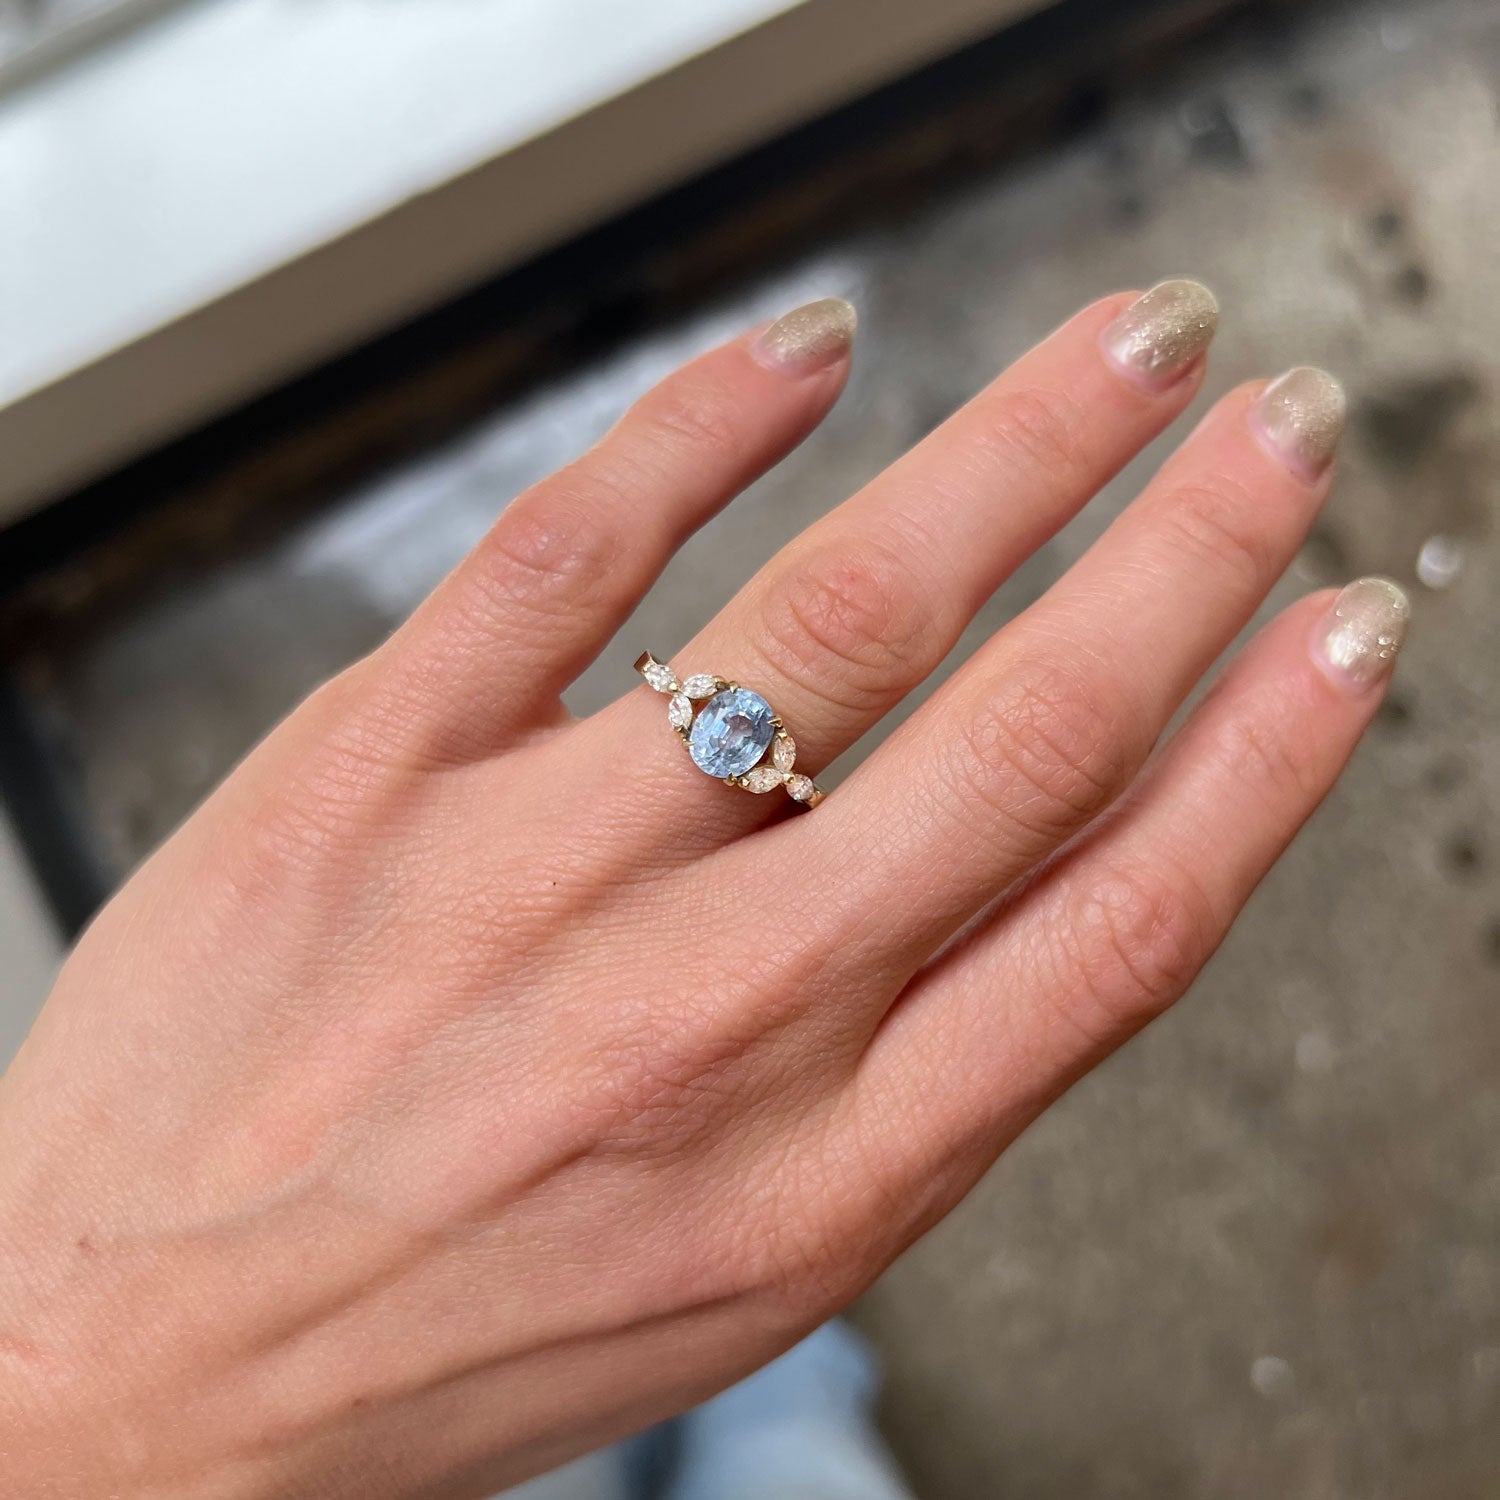 Willow | Australian Icy Blue Sapphire Ring - World Treasure Designs